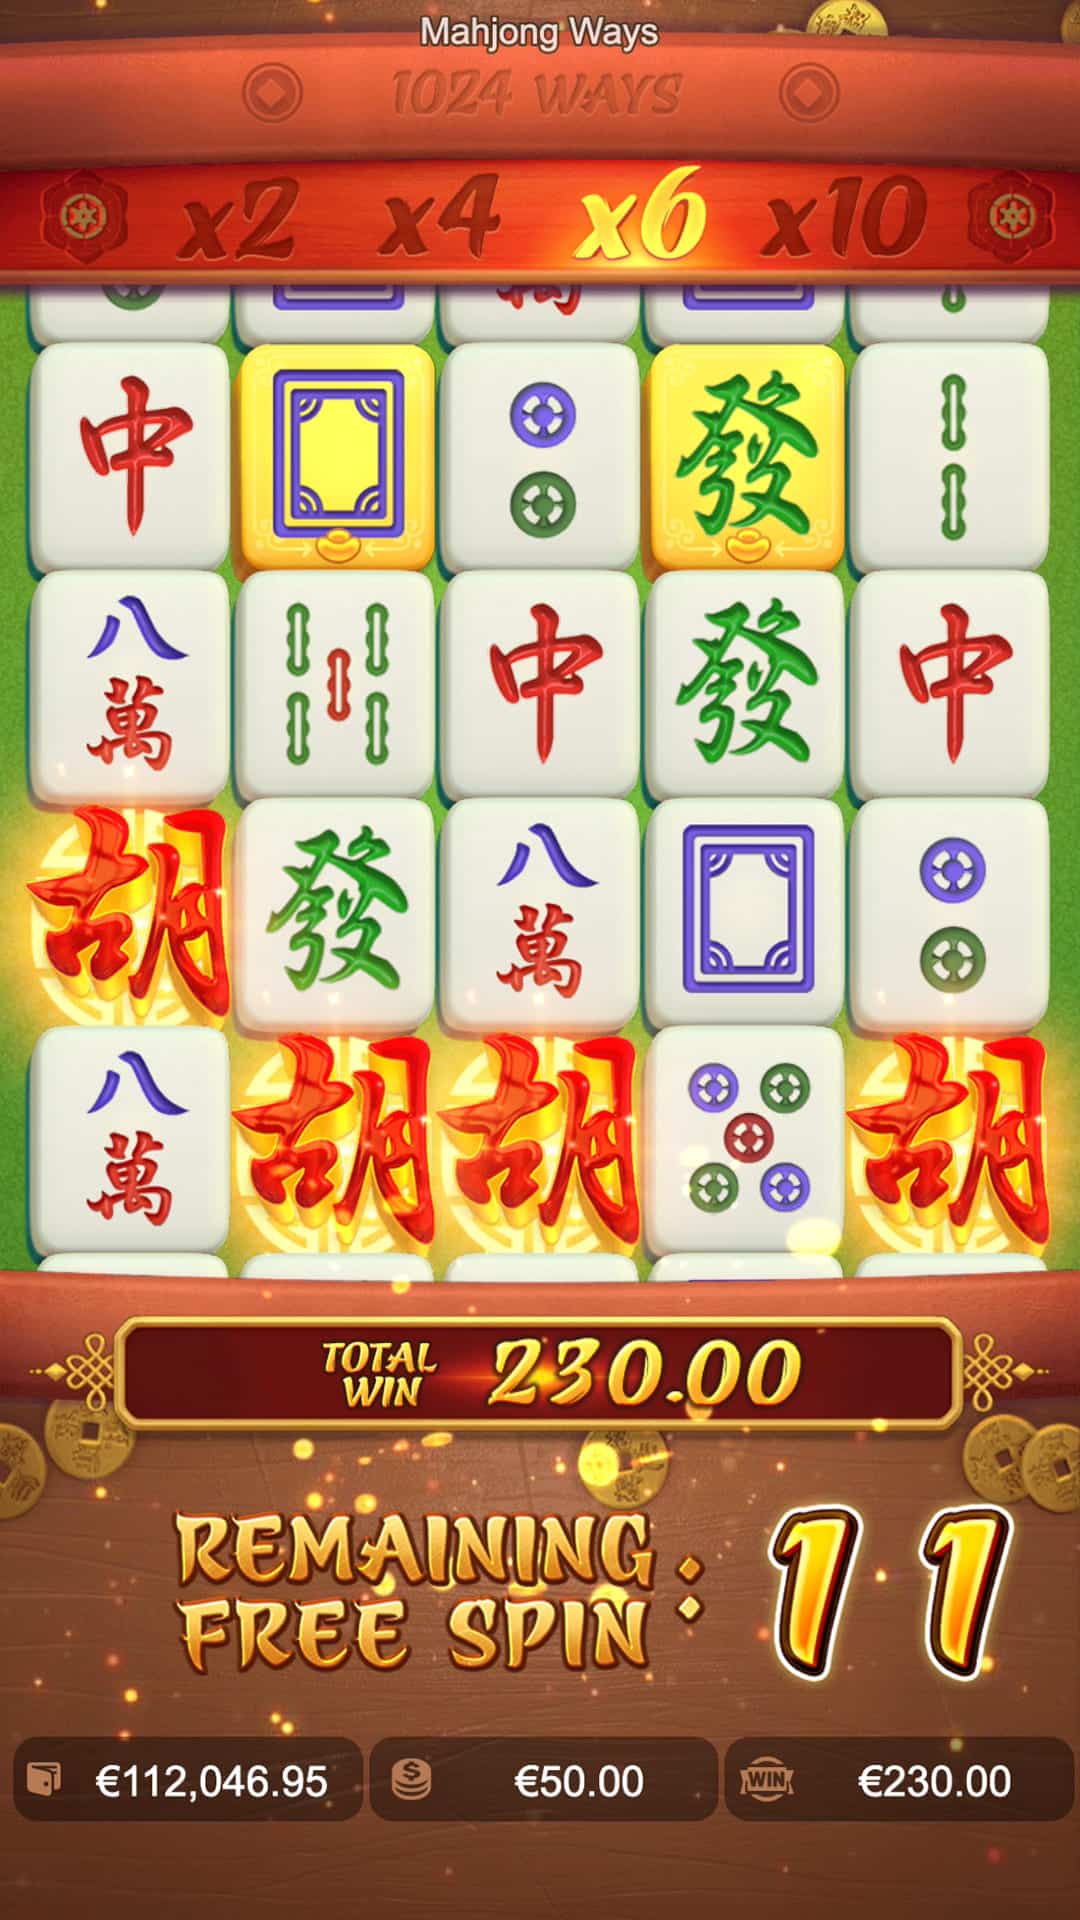 Mahjong Ways freespins